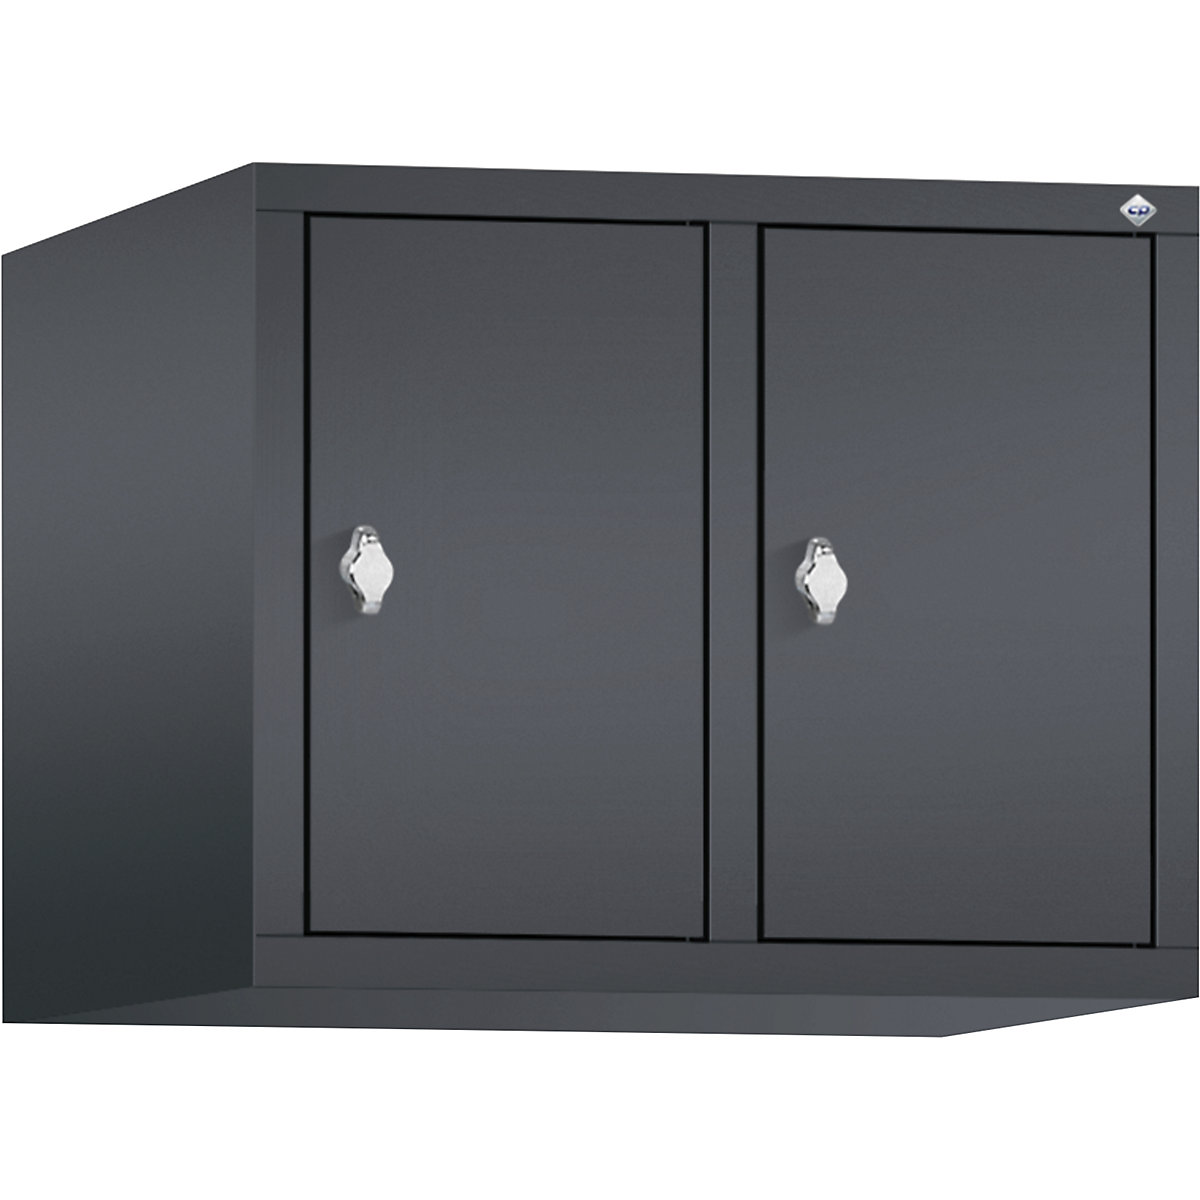 C+P – Altillo CLASSIC, 2 compartimentos, anchura de compartimento 300 mm, gris negruzco